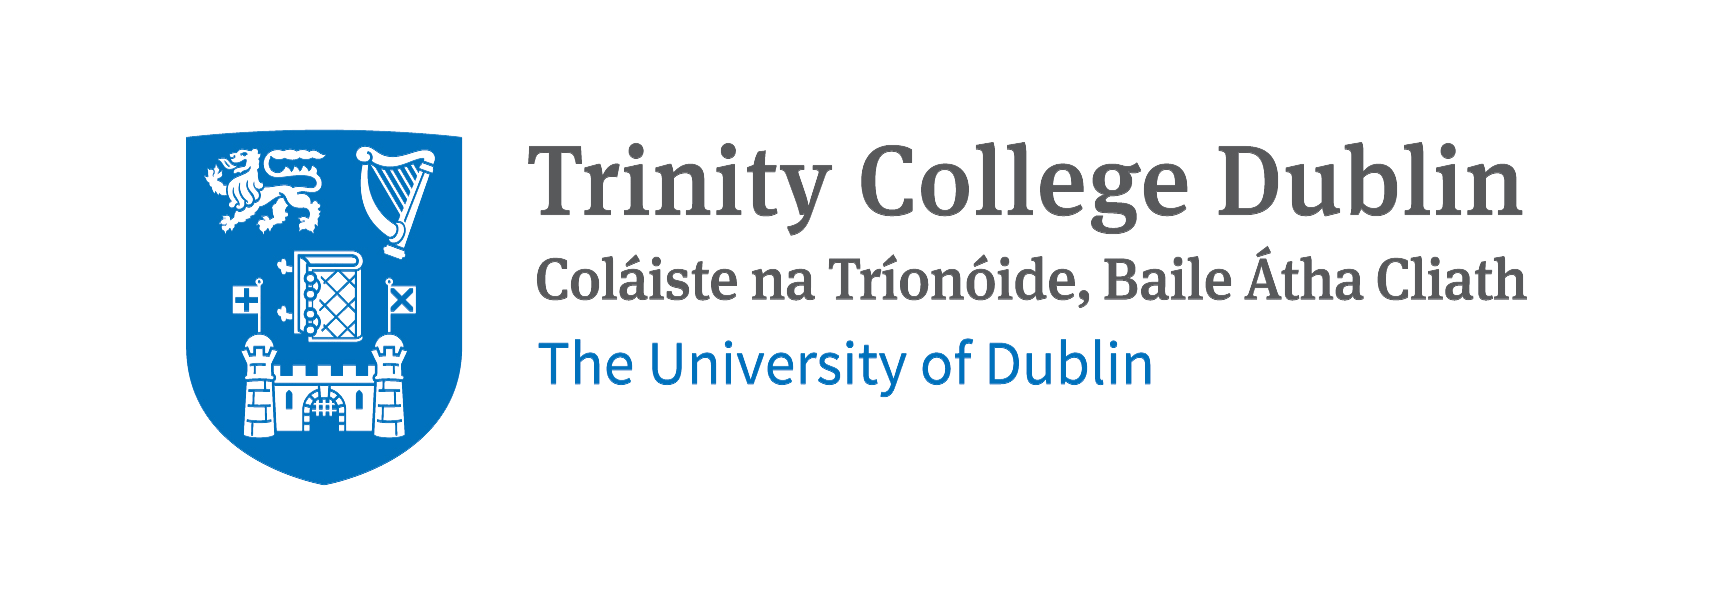 image of Trinity College Dublin logo